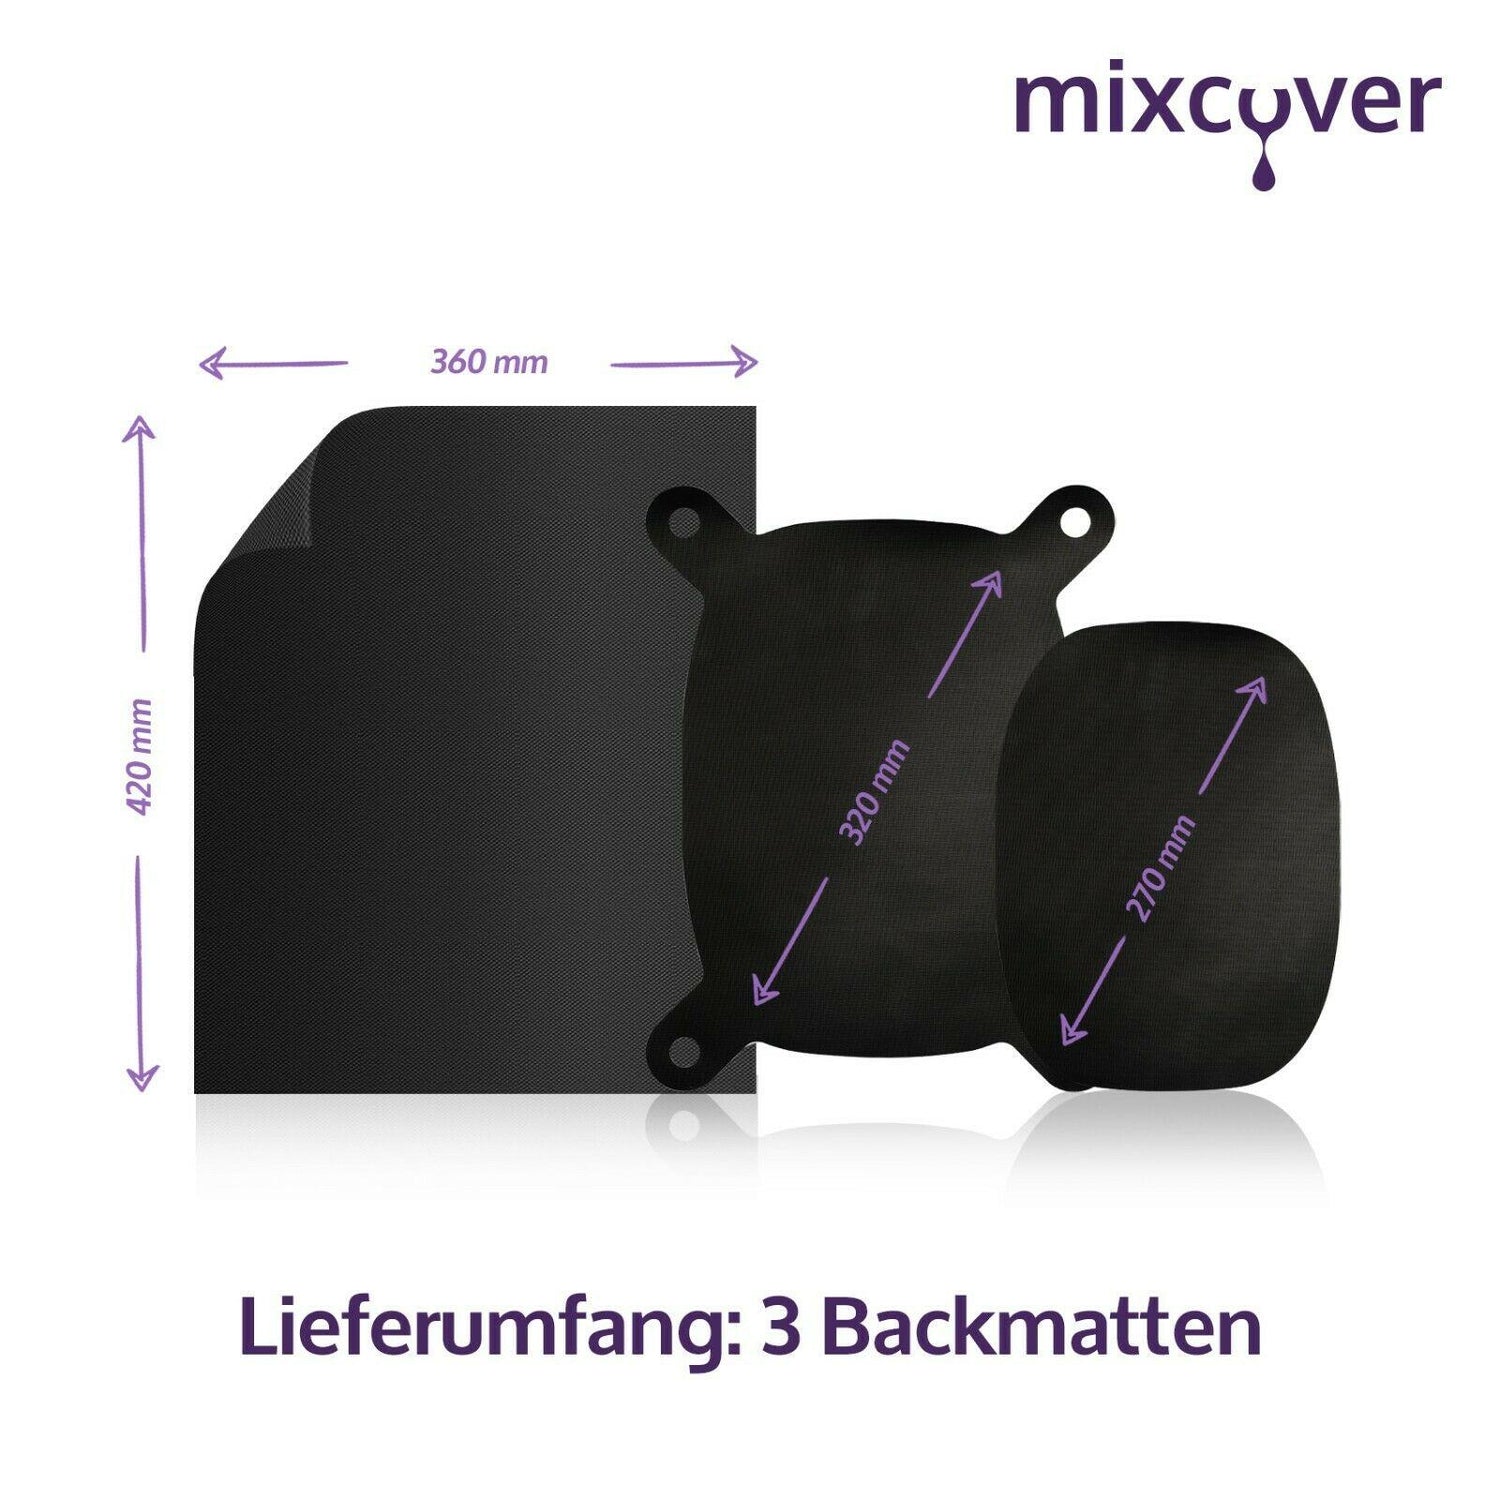 B-Ware: Dauerbackfolie - Backpapier für Monsieur Cuisine Connect & Smart - Mixcover - Mixcover